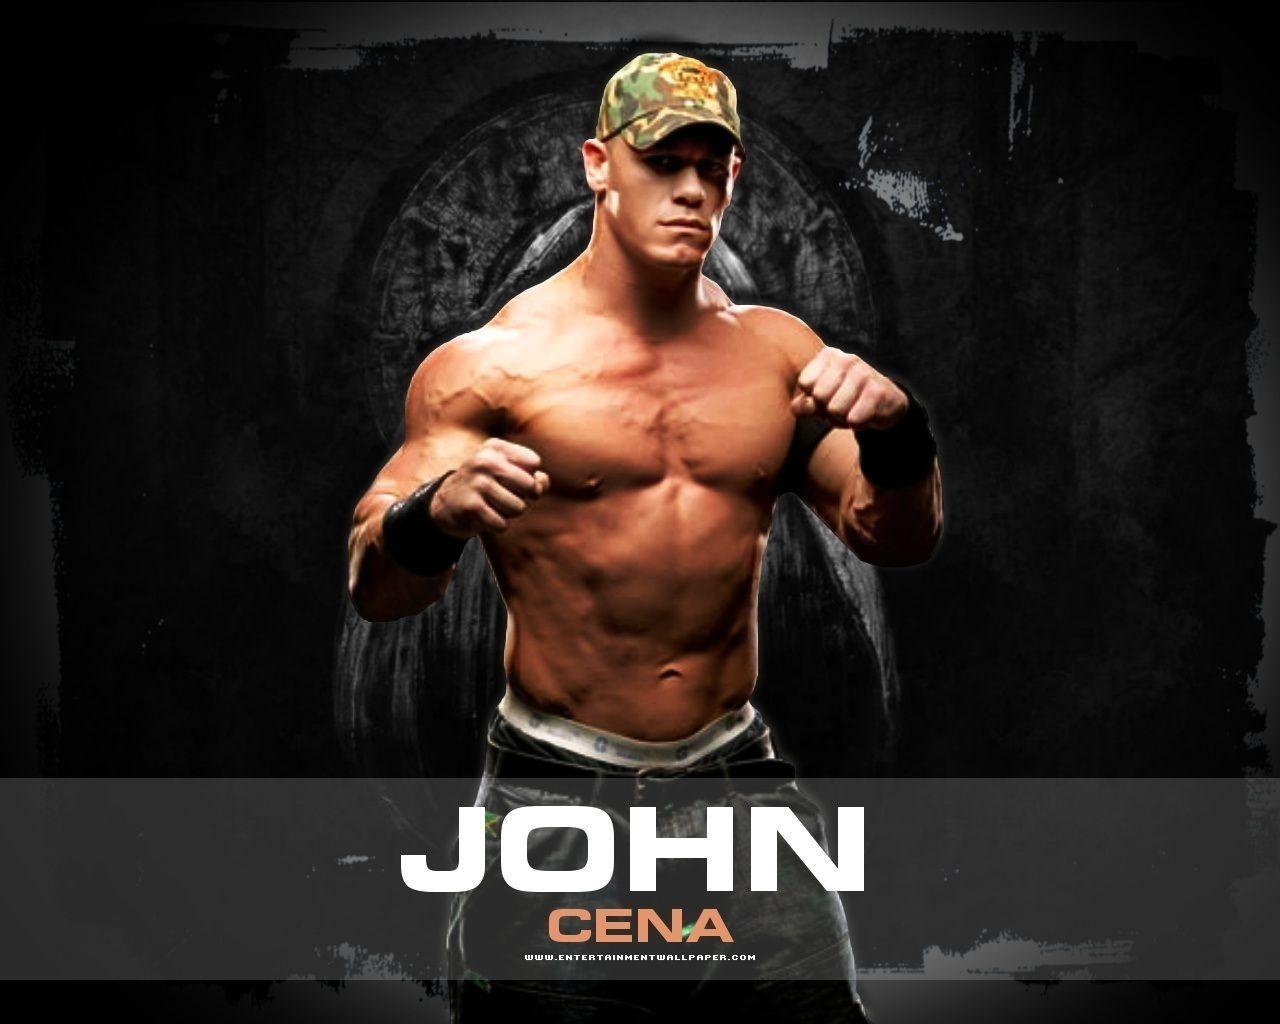 John Cena Wallpaper High Quality Download Free 1920×1080 John Cena